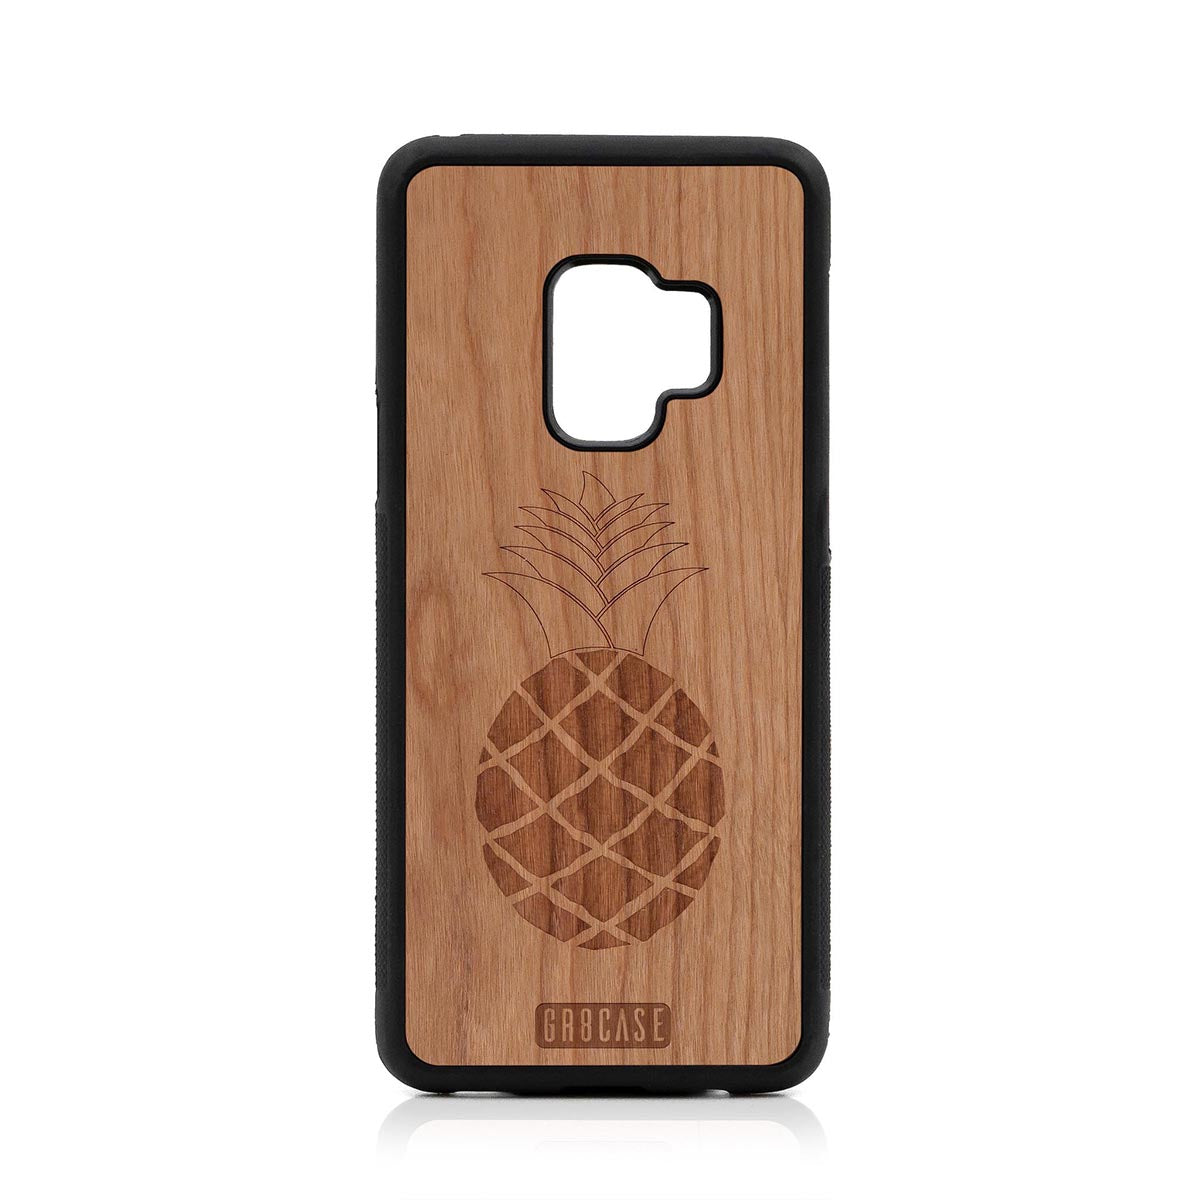 Pineapple Design Wood Case Samsung Galaxy S9 by GR8CASE